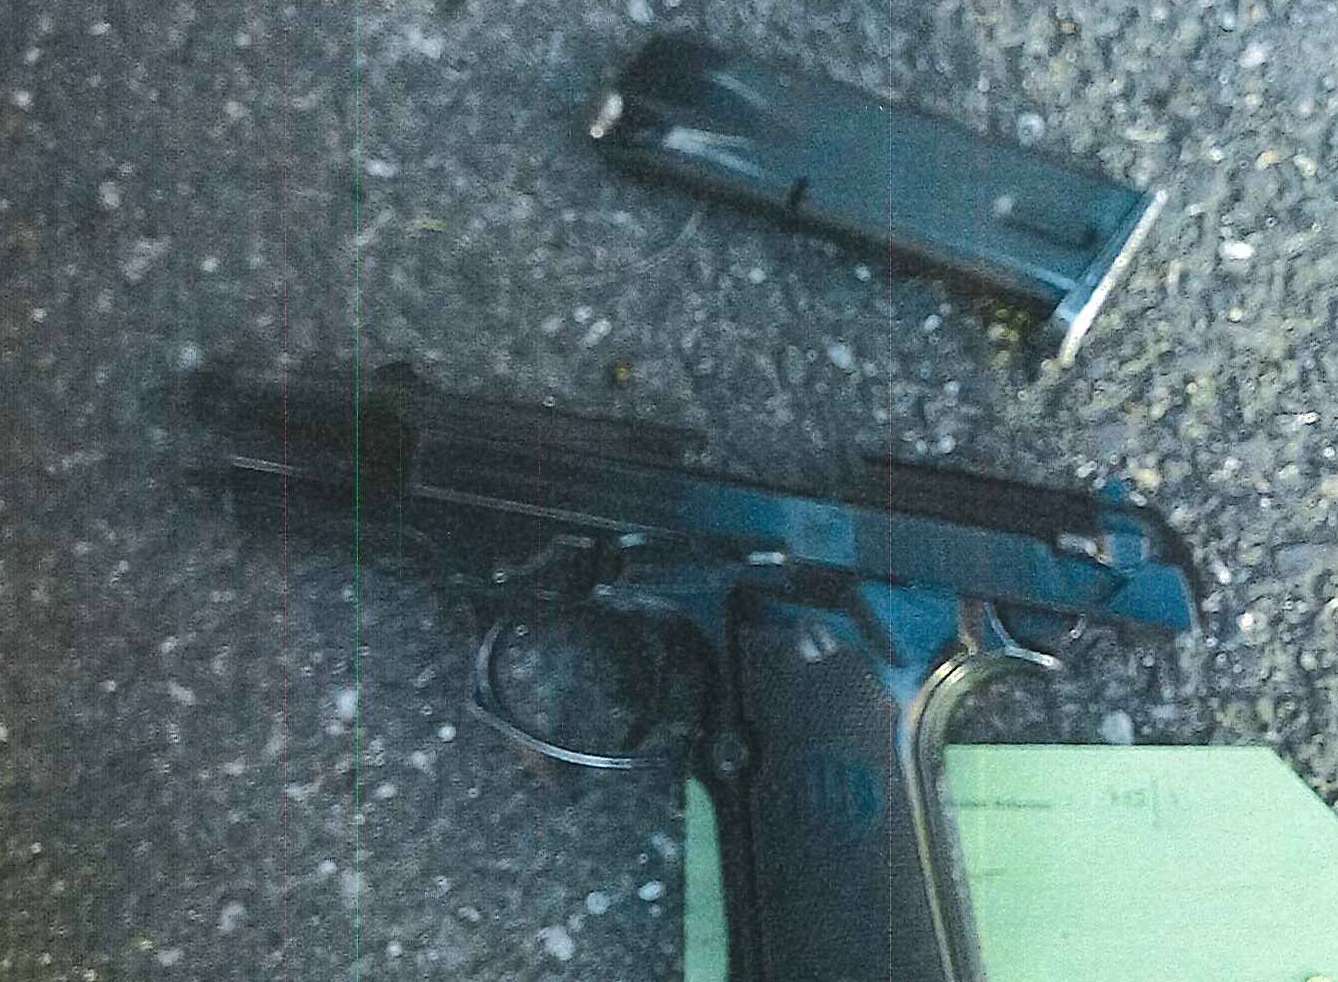 A handgun discarded after the raid